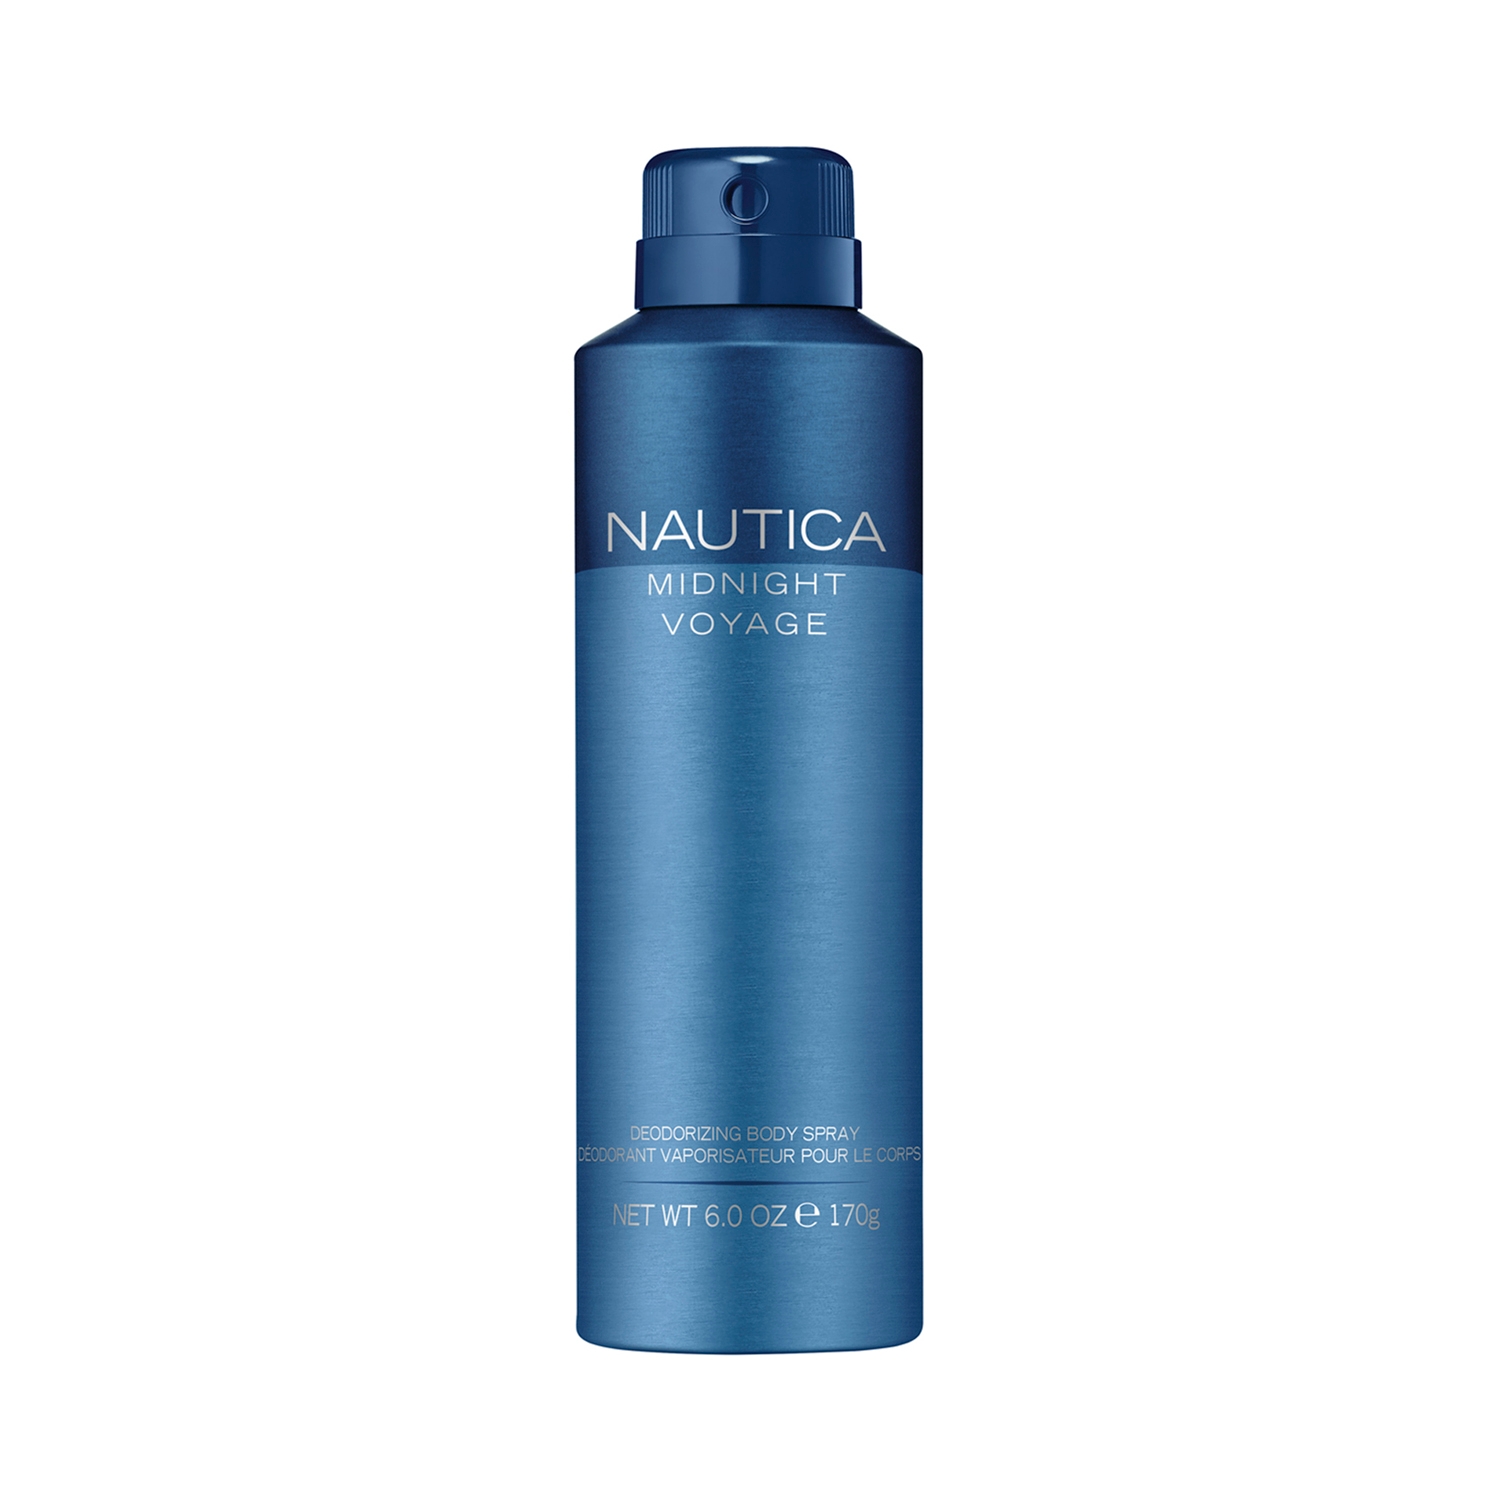 Nautica | Nautica Midnight Voyage Body Spray (170g)